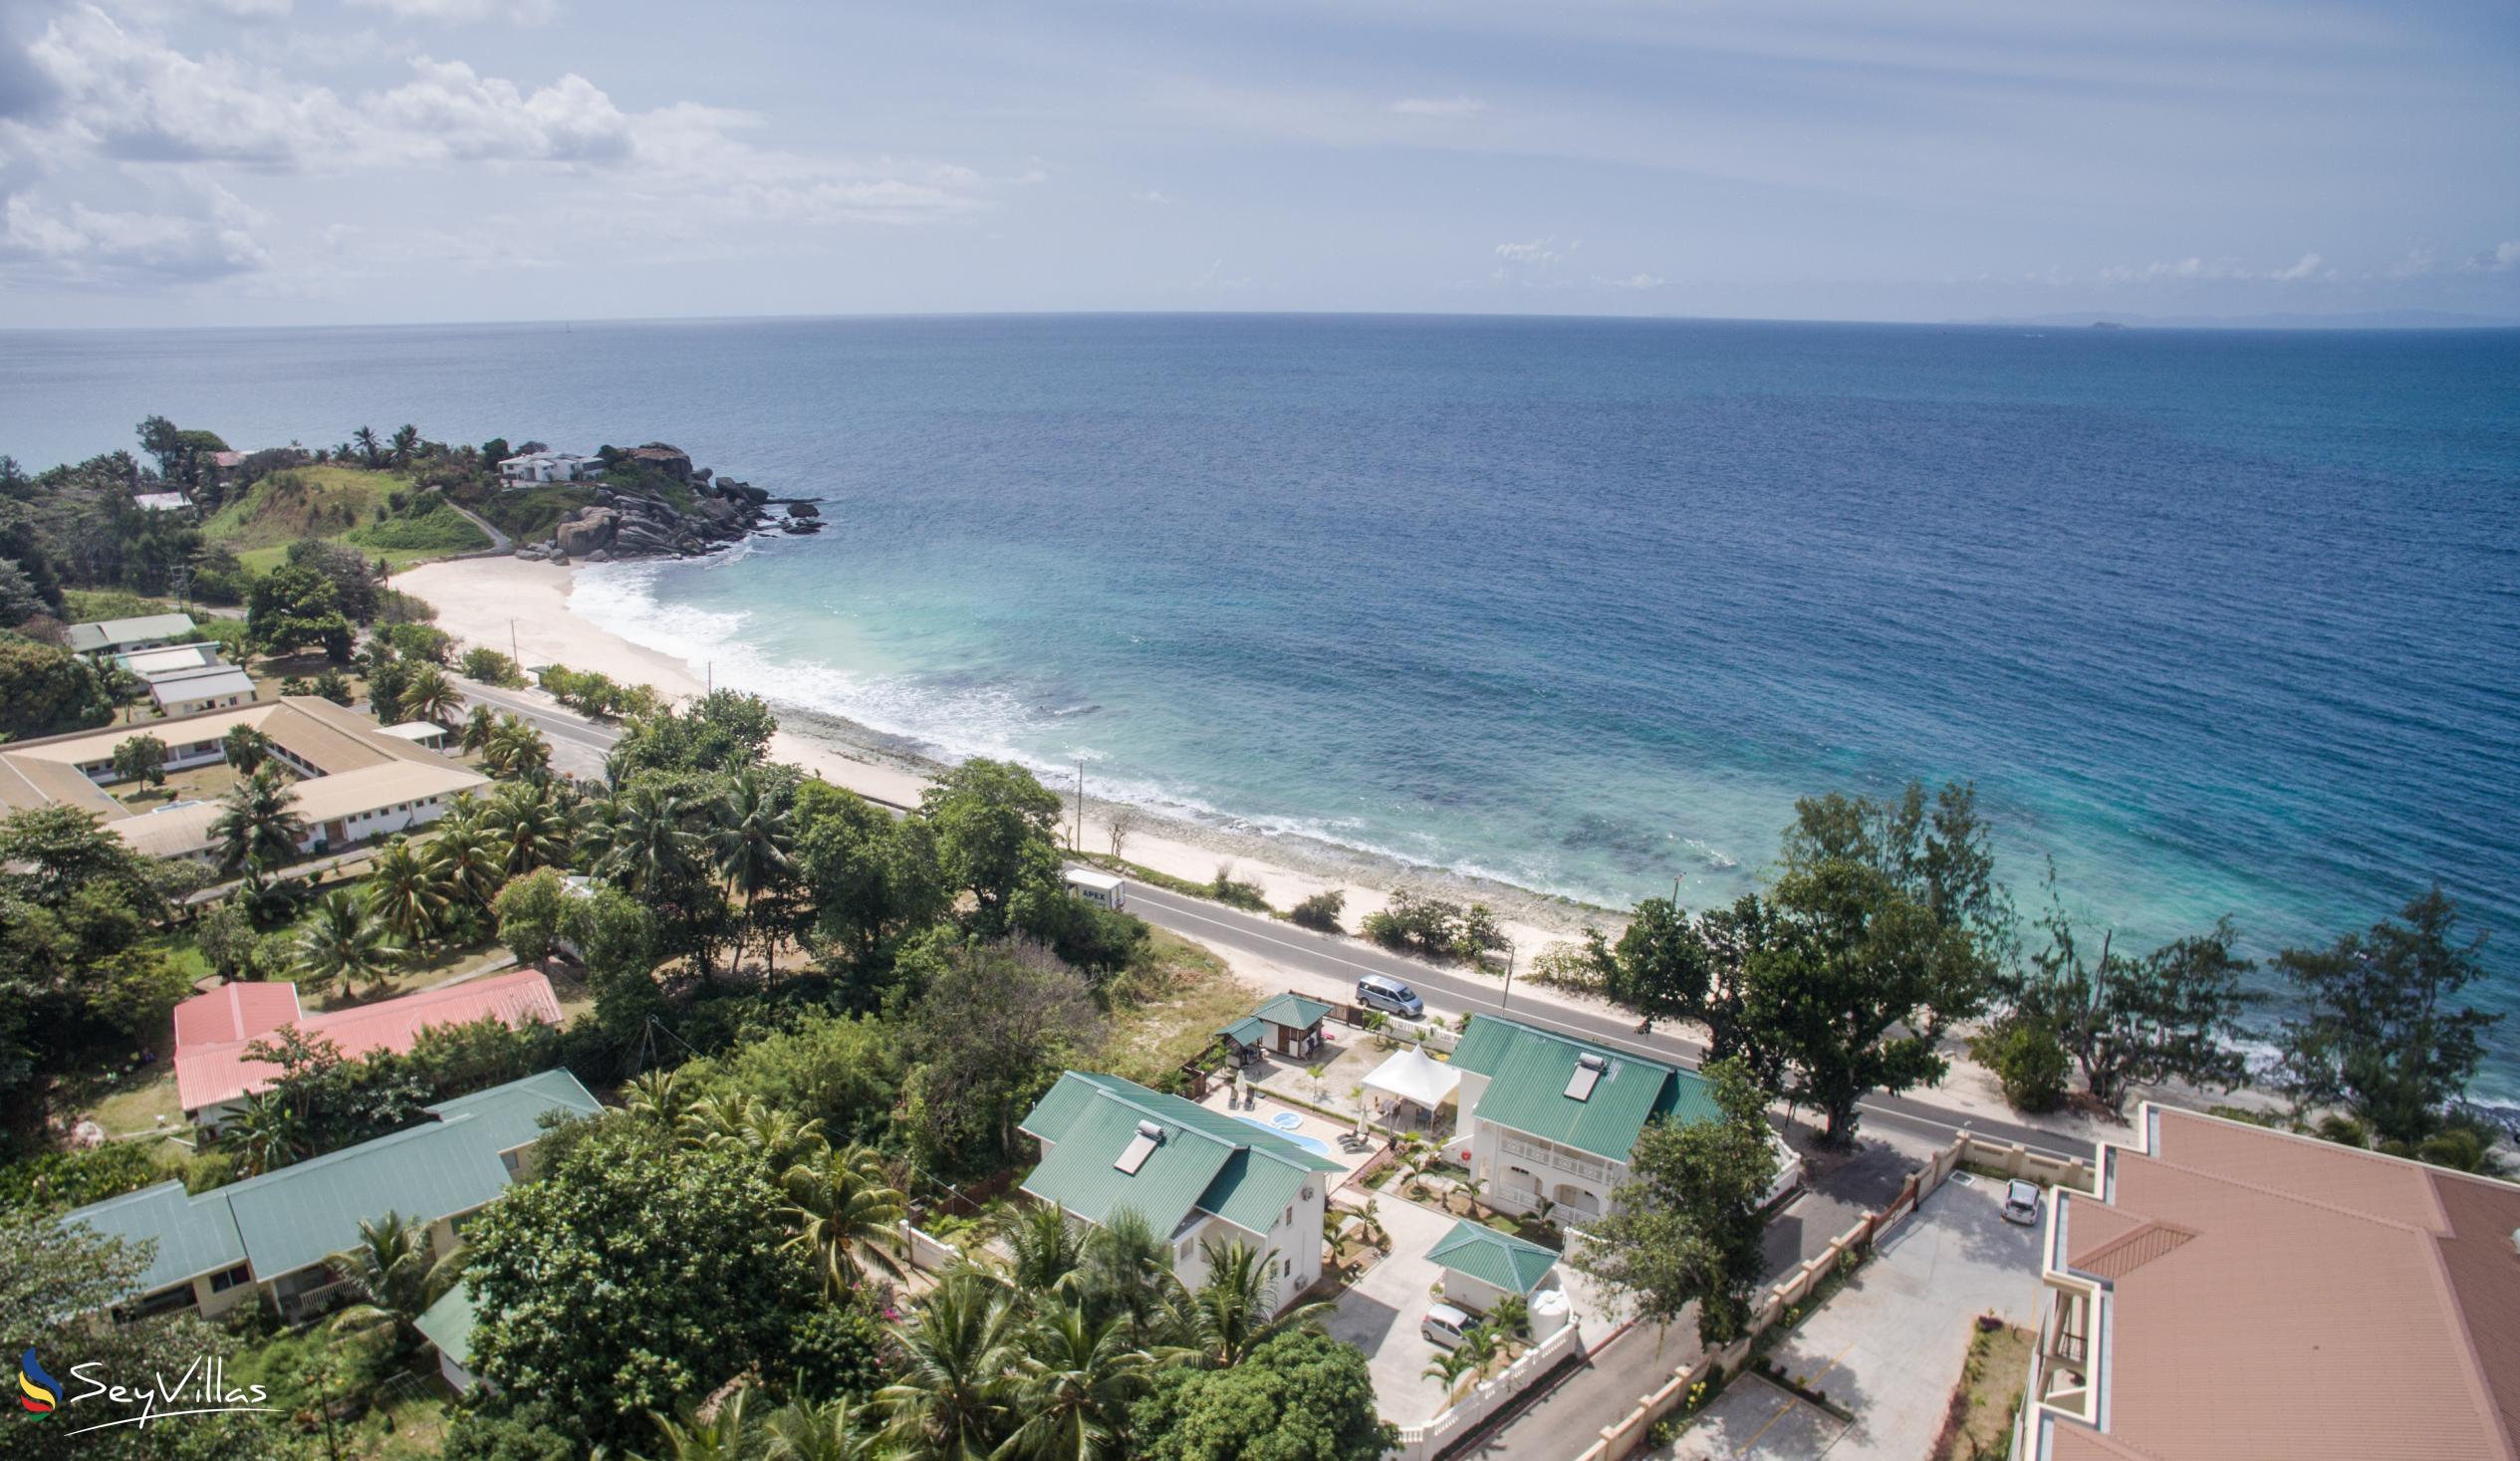 Foto 9: Villa Koket - Aussenbereich - Mahé (Seychellen)